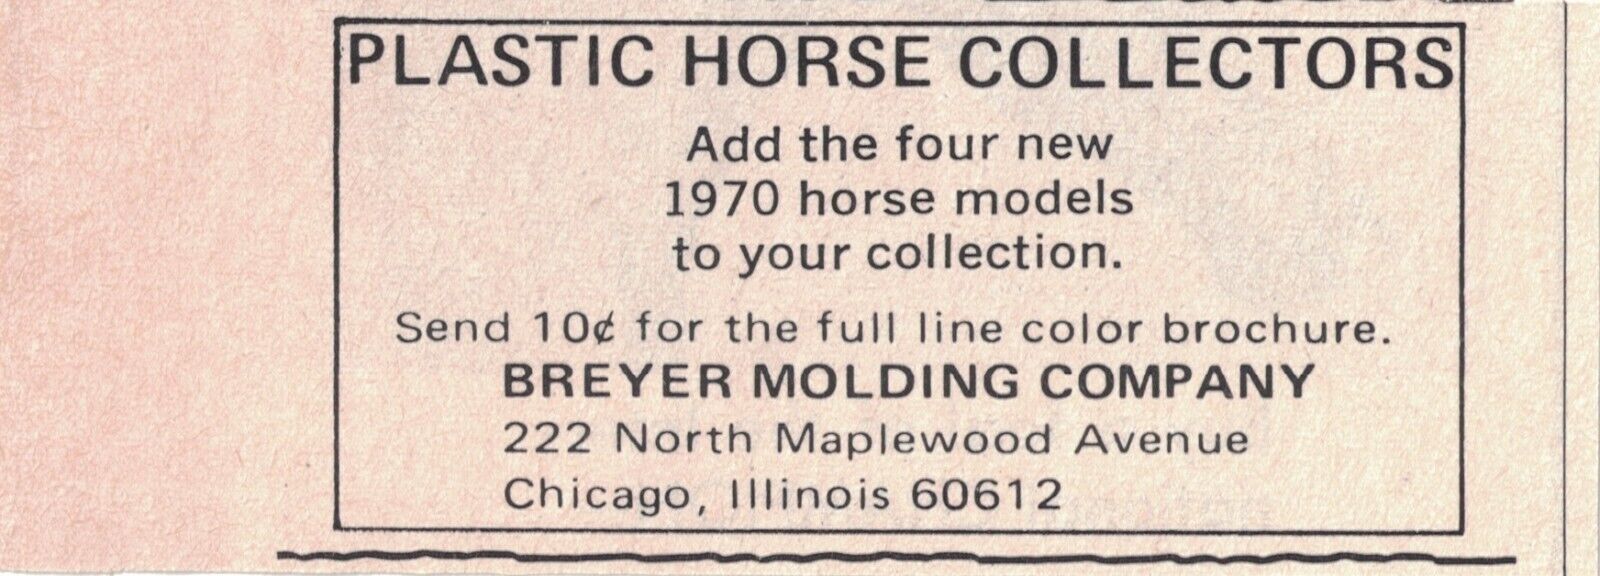 Breyer Molding Company Chicago Illinois 1970 Horse Models Vintage Mag Print Ad